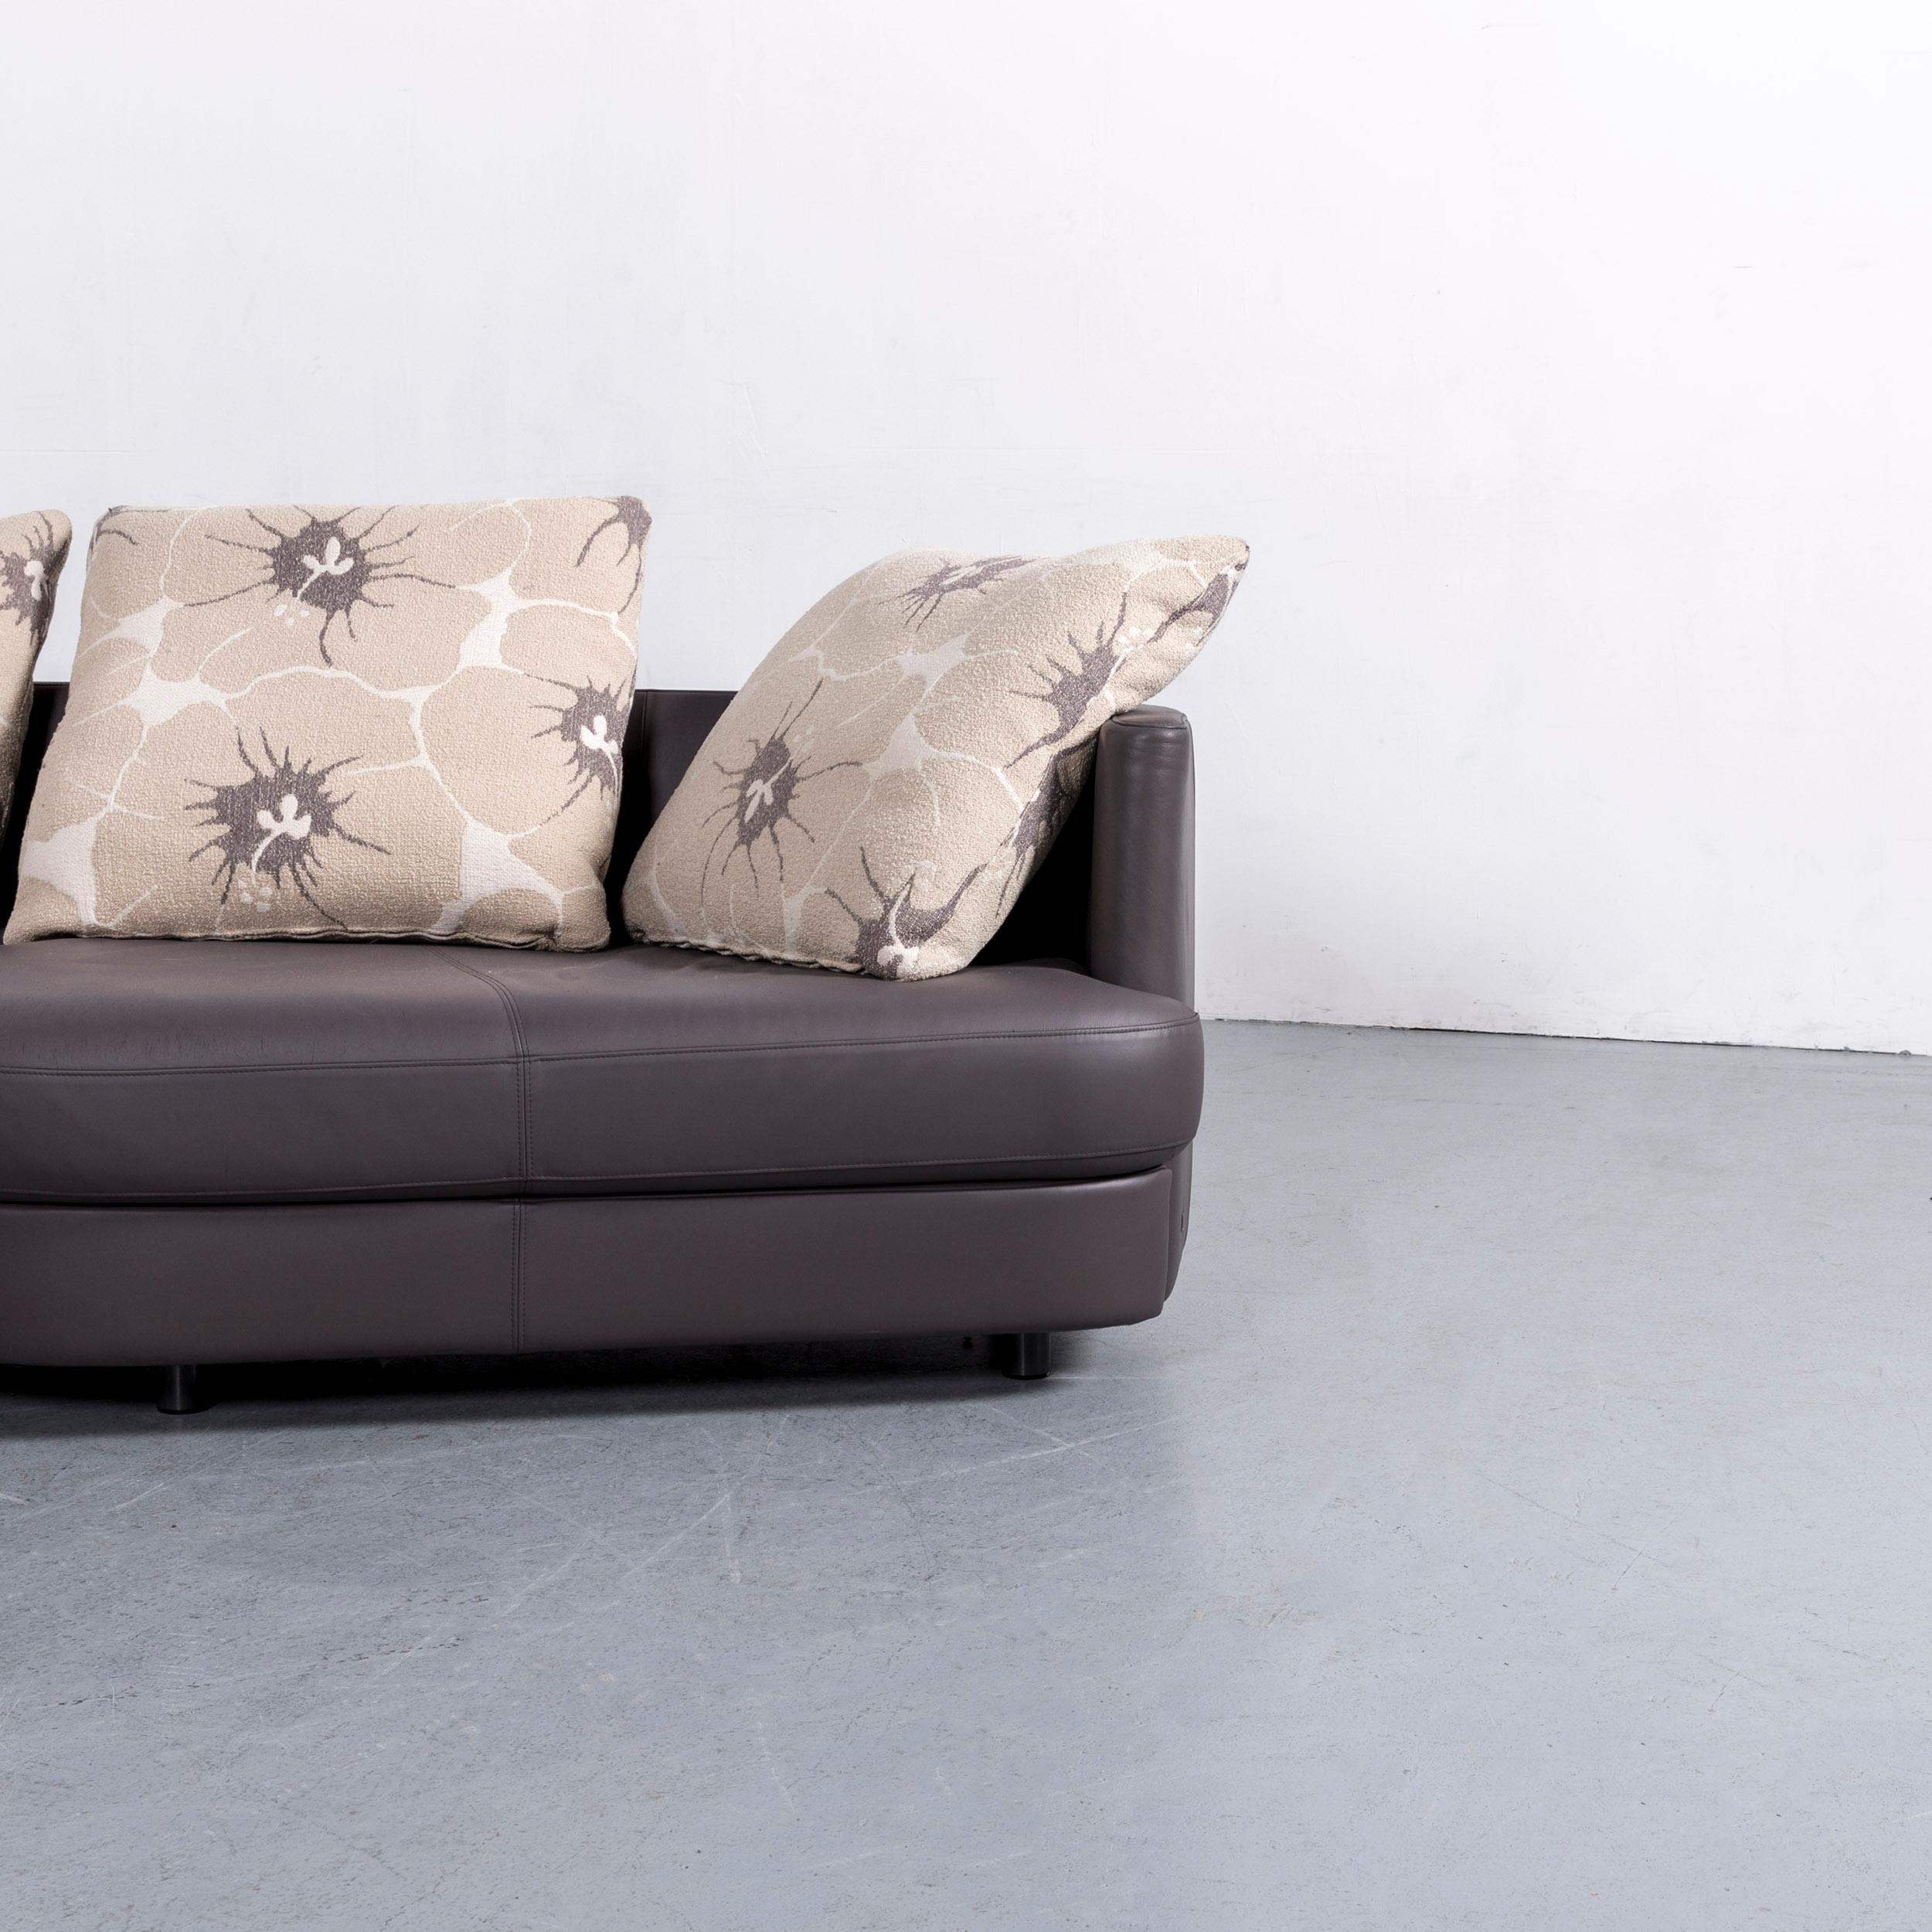 We bring to you an Rolf Benz Designer leather corner sofa grey purple.